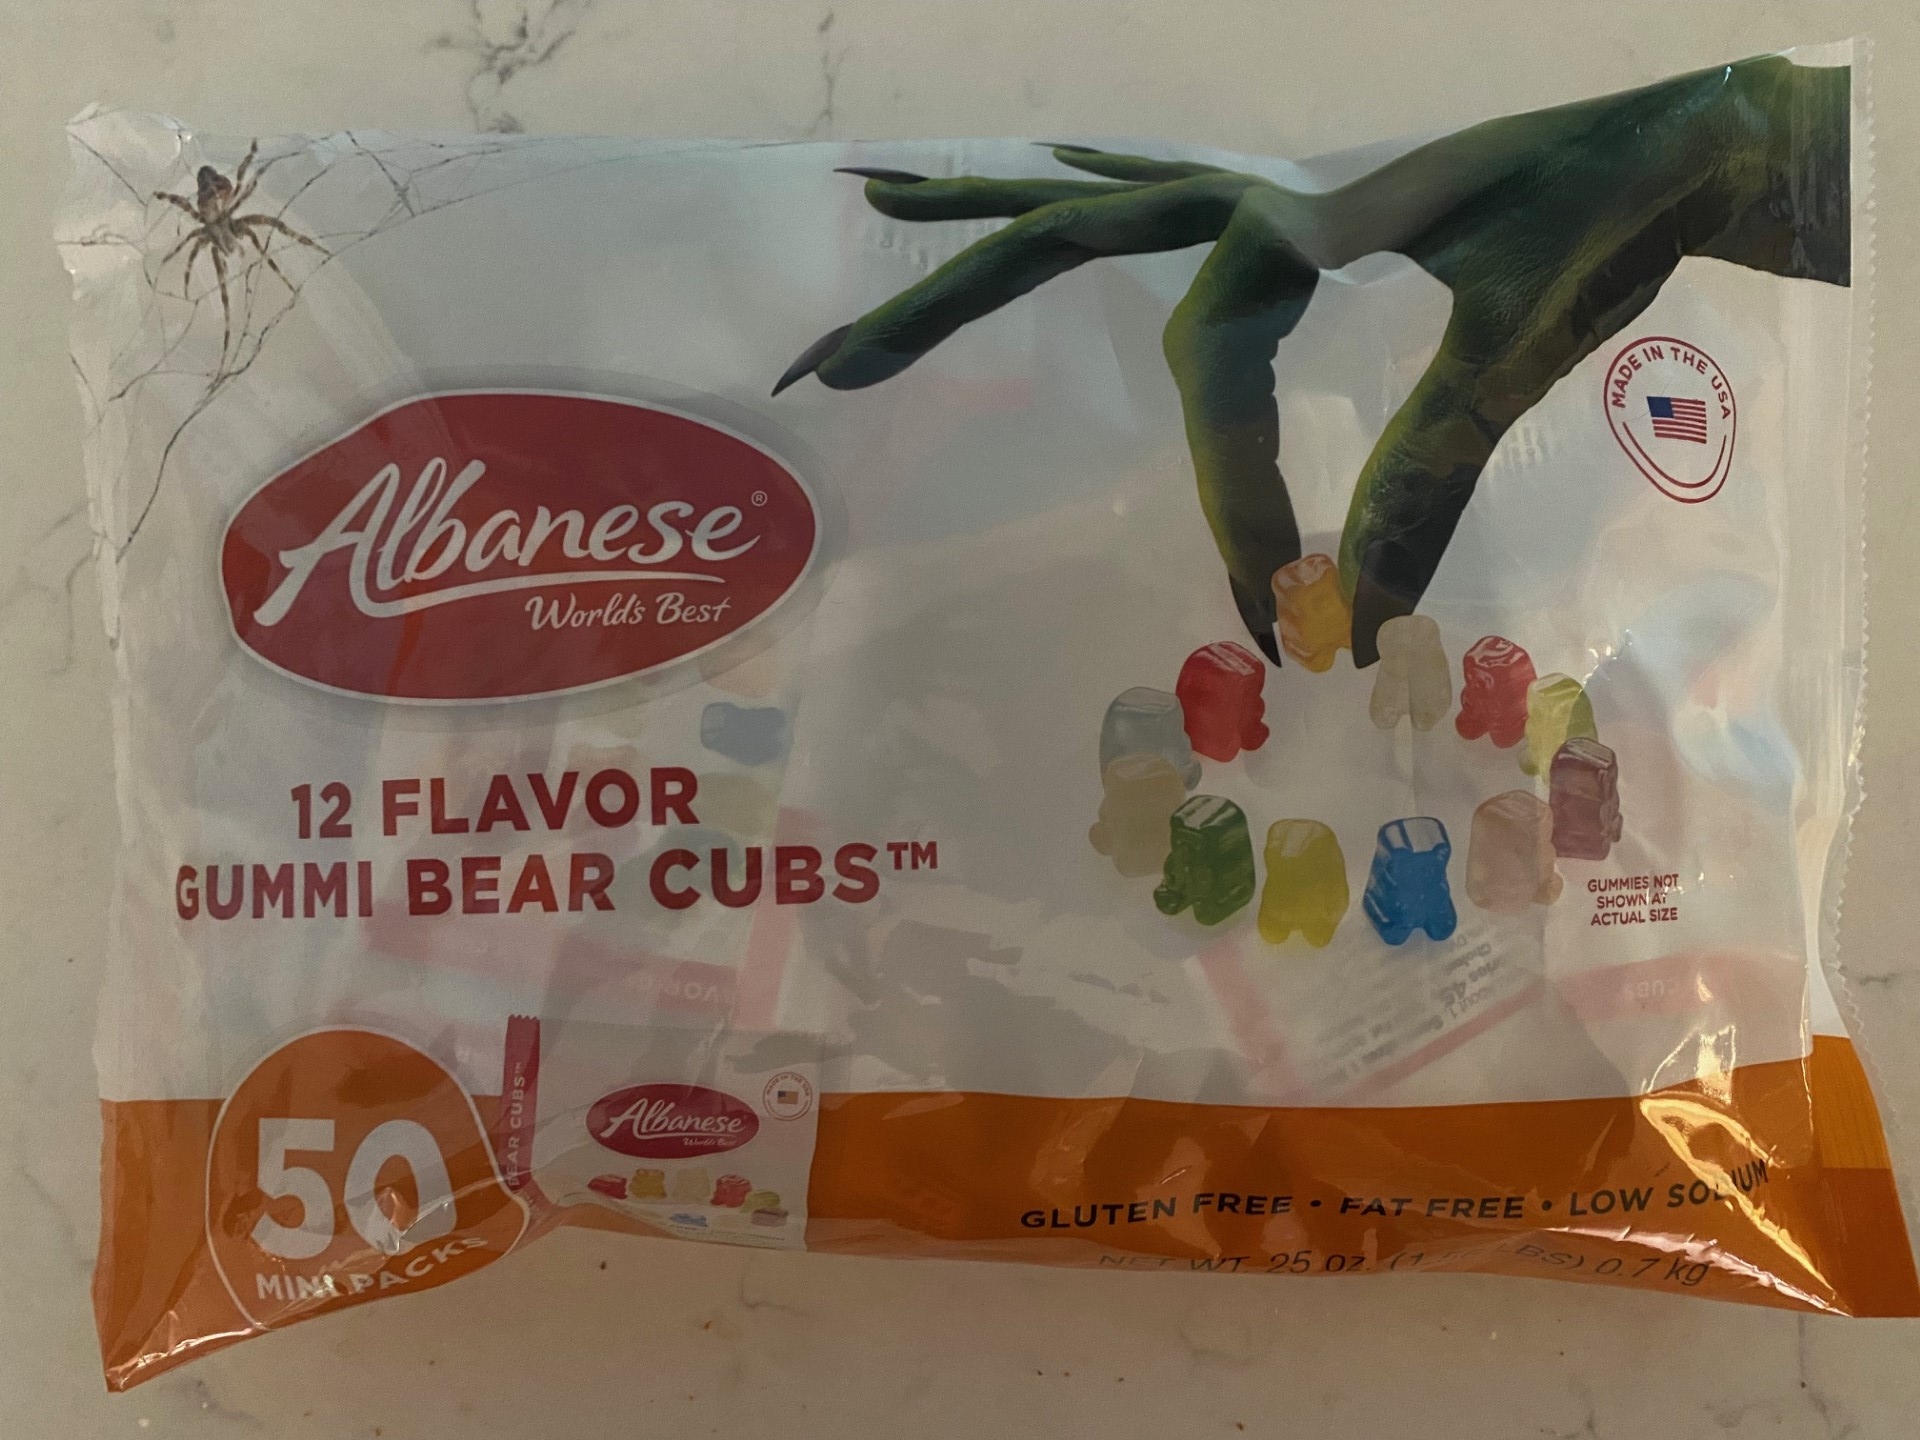 Gummy Bears - Robinson's Chocolates